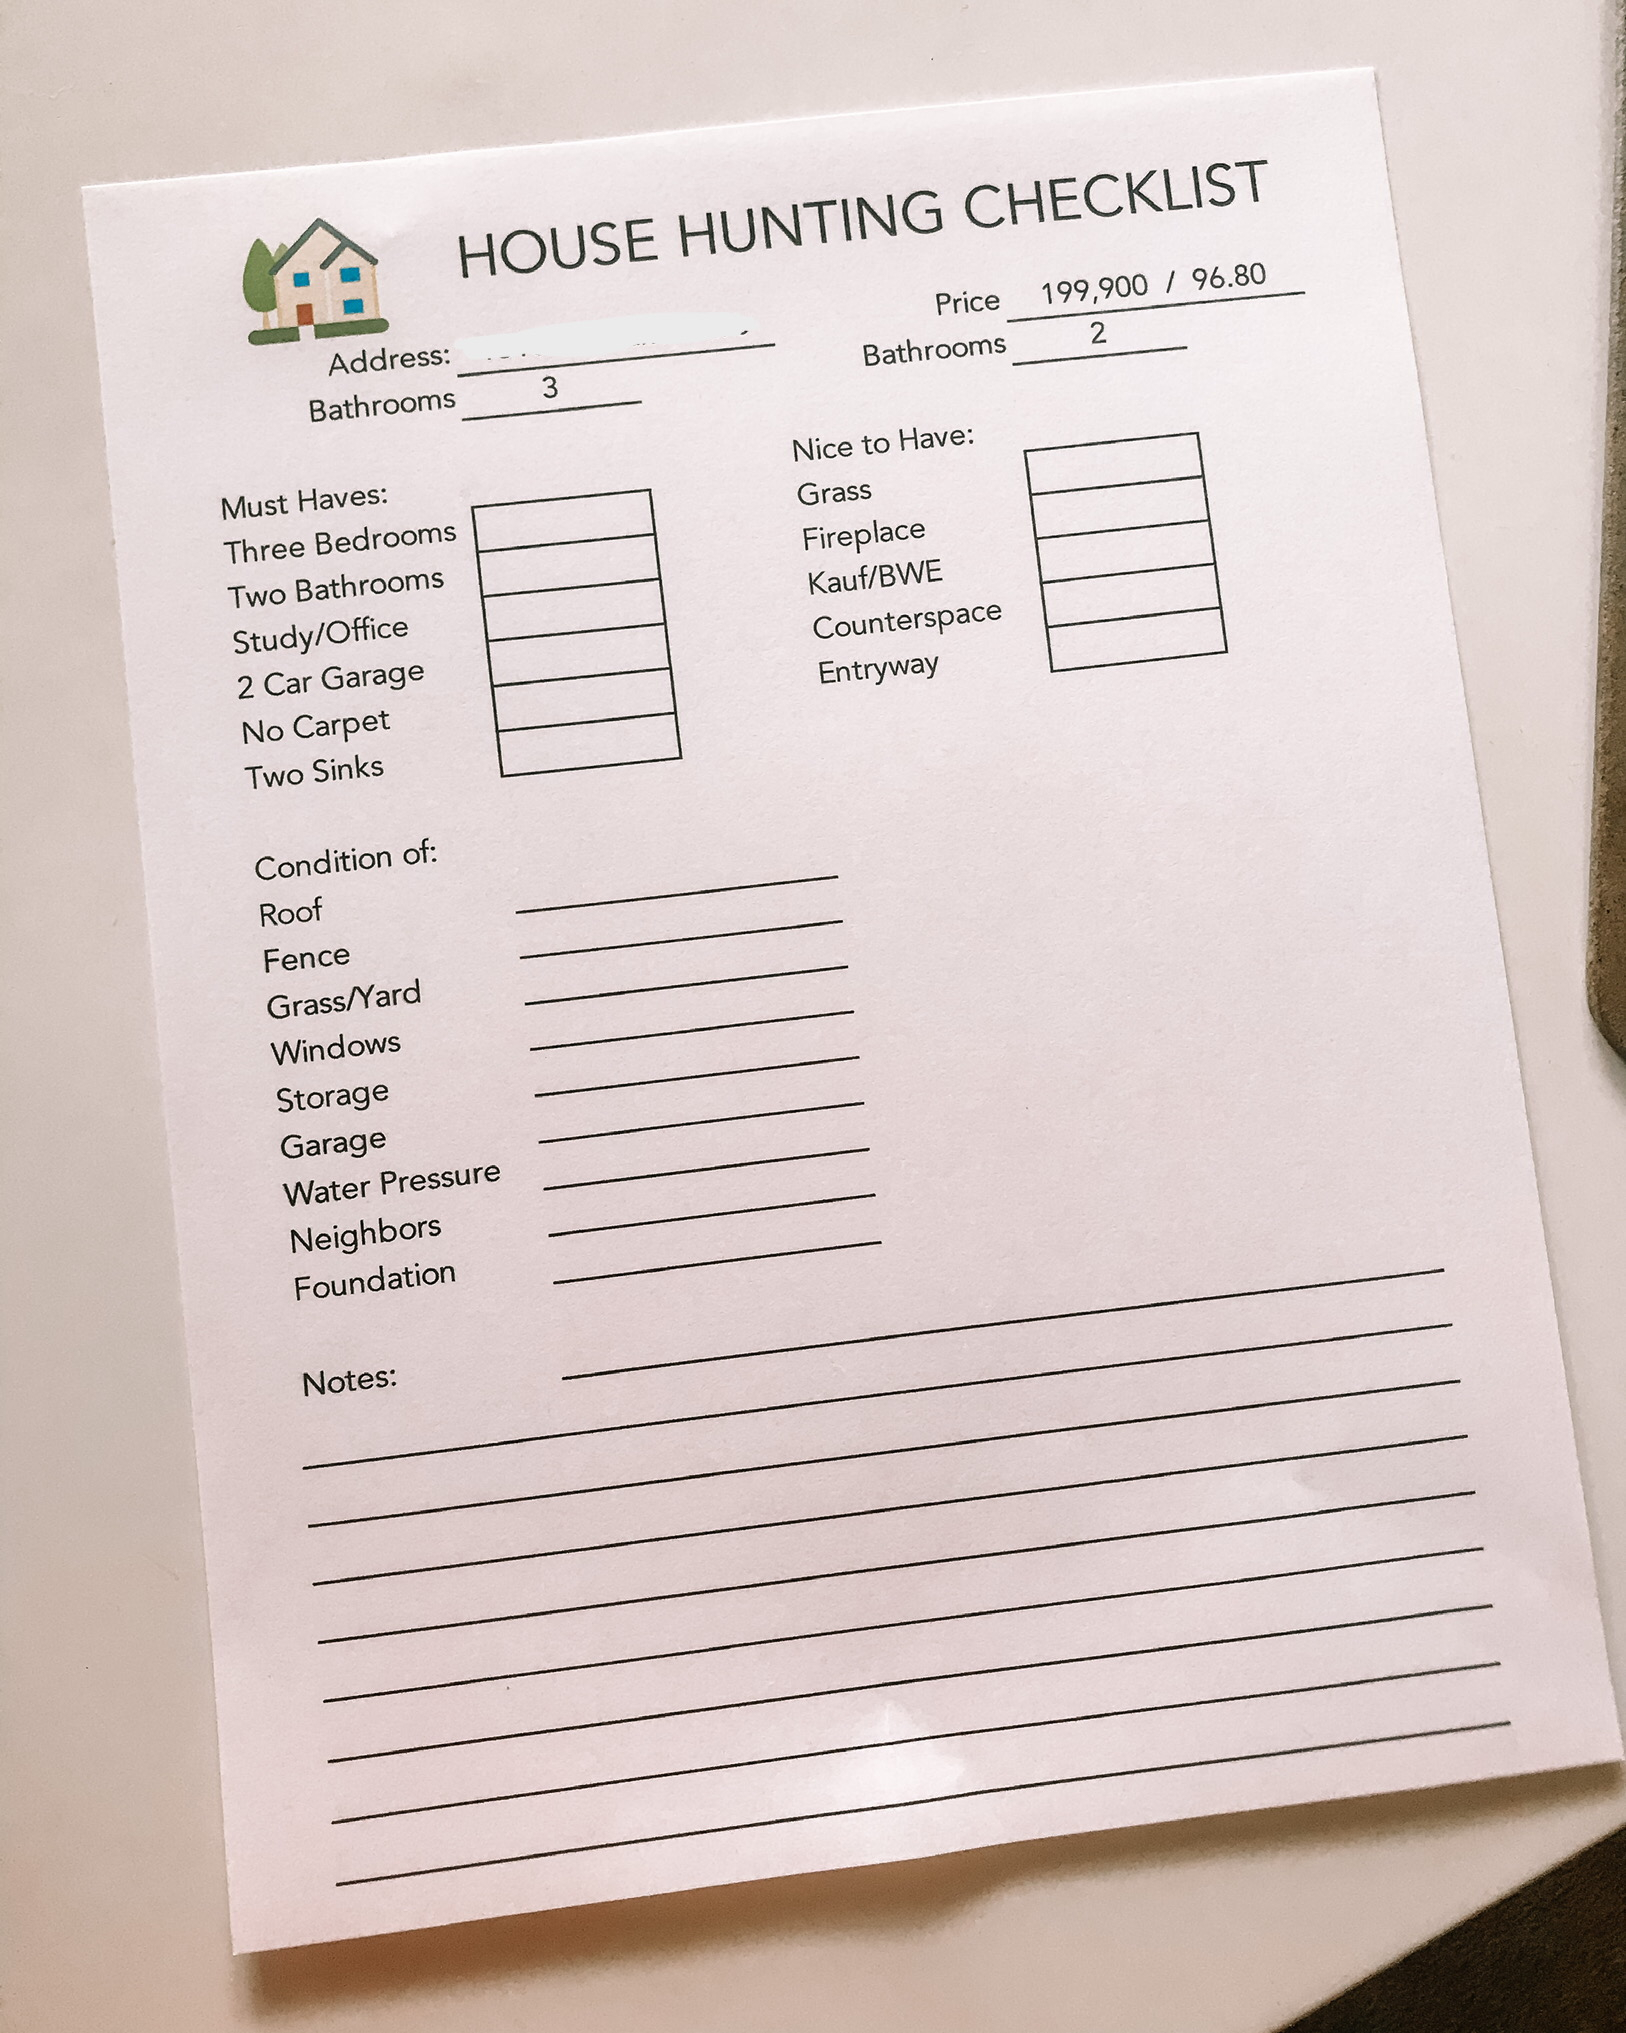 House Hunting Checklist - Free Printable  Skye McLain With House Hunting Checklist Template For House Hunting Checklist Template